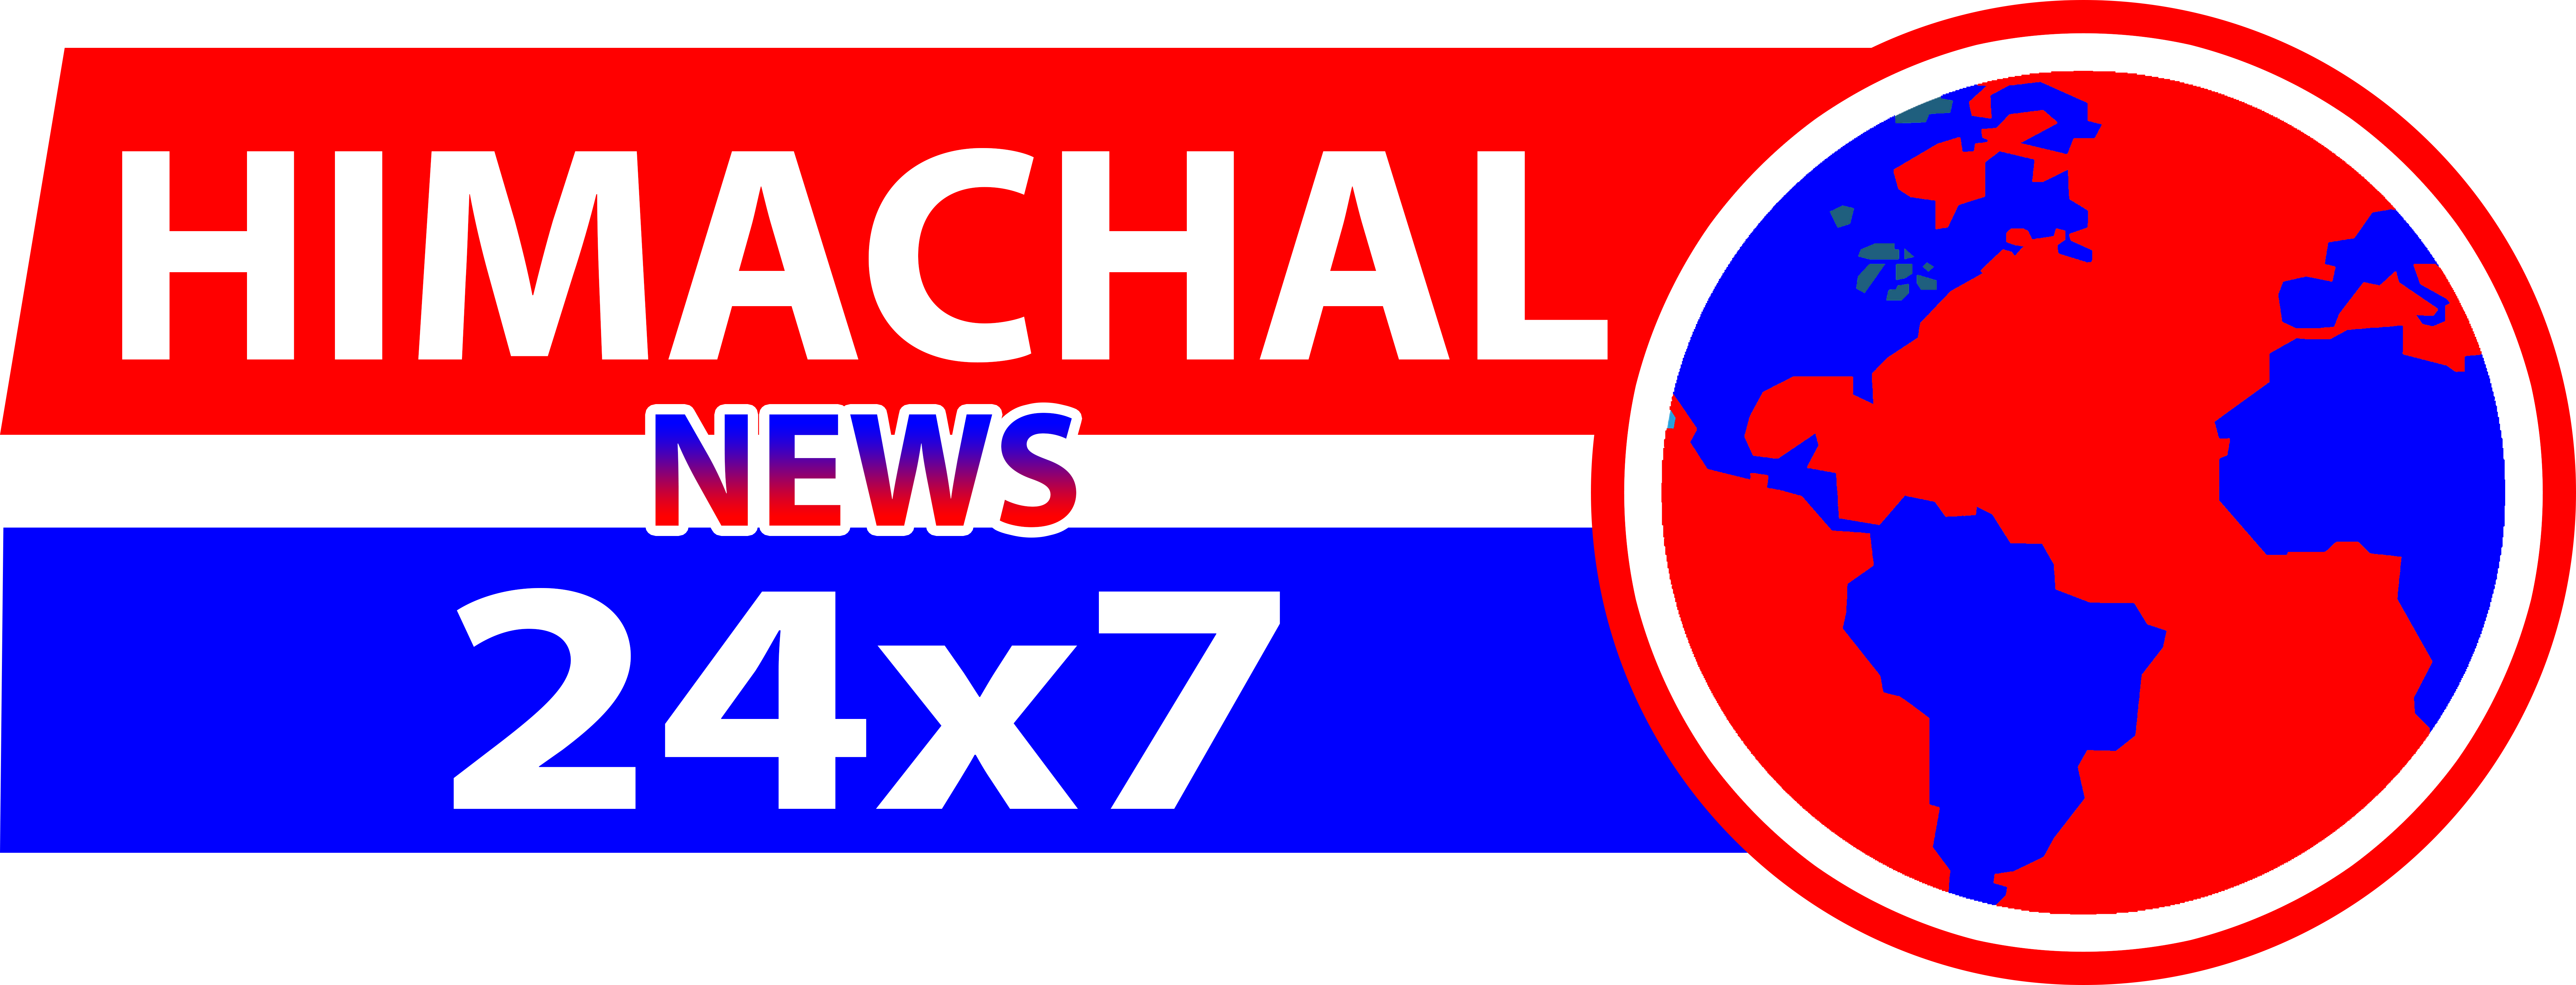 Himachal News 24×7 